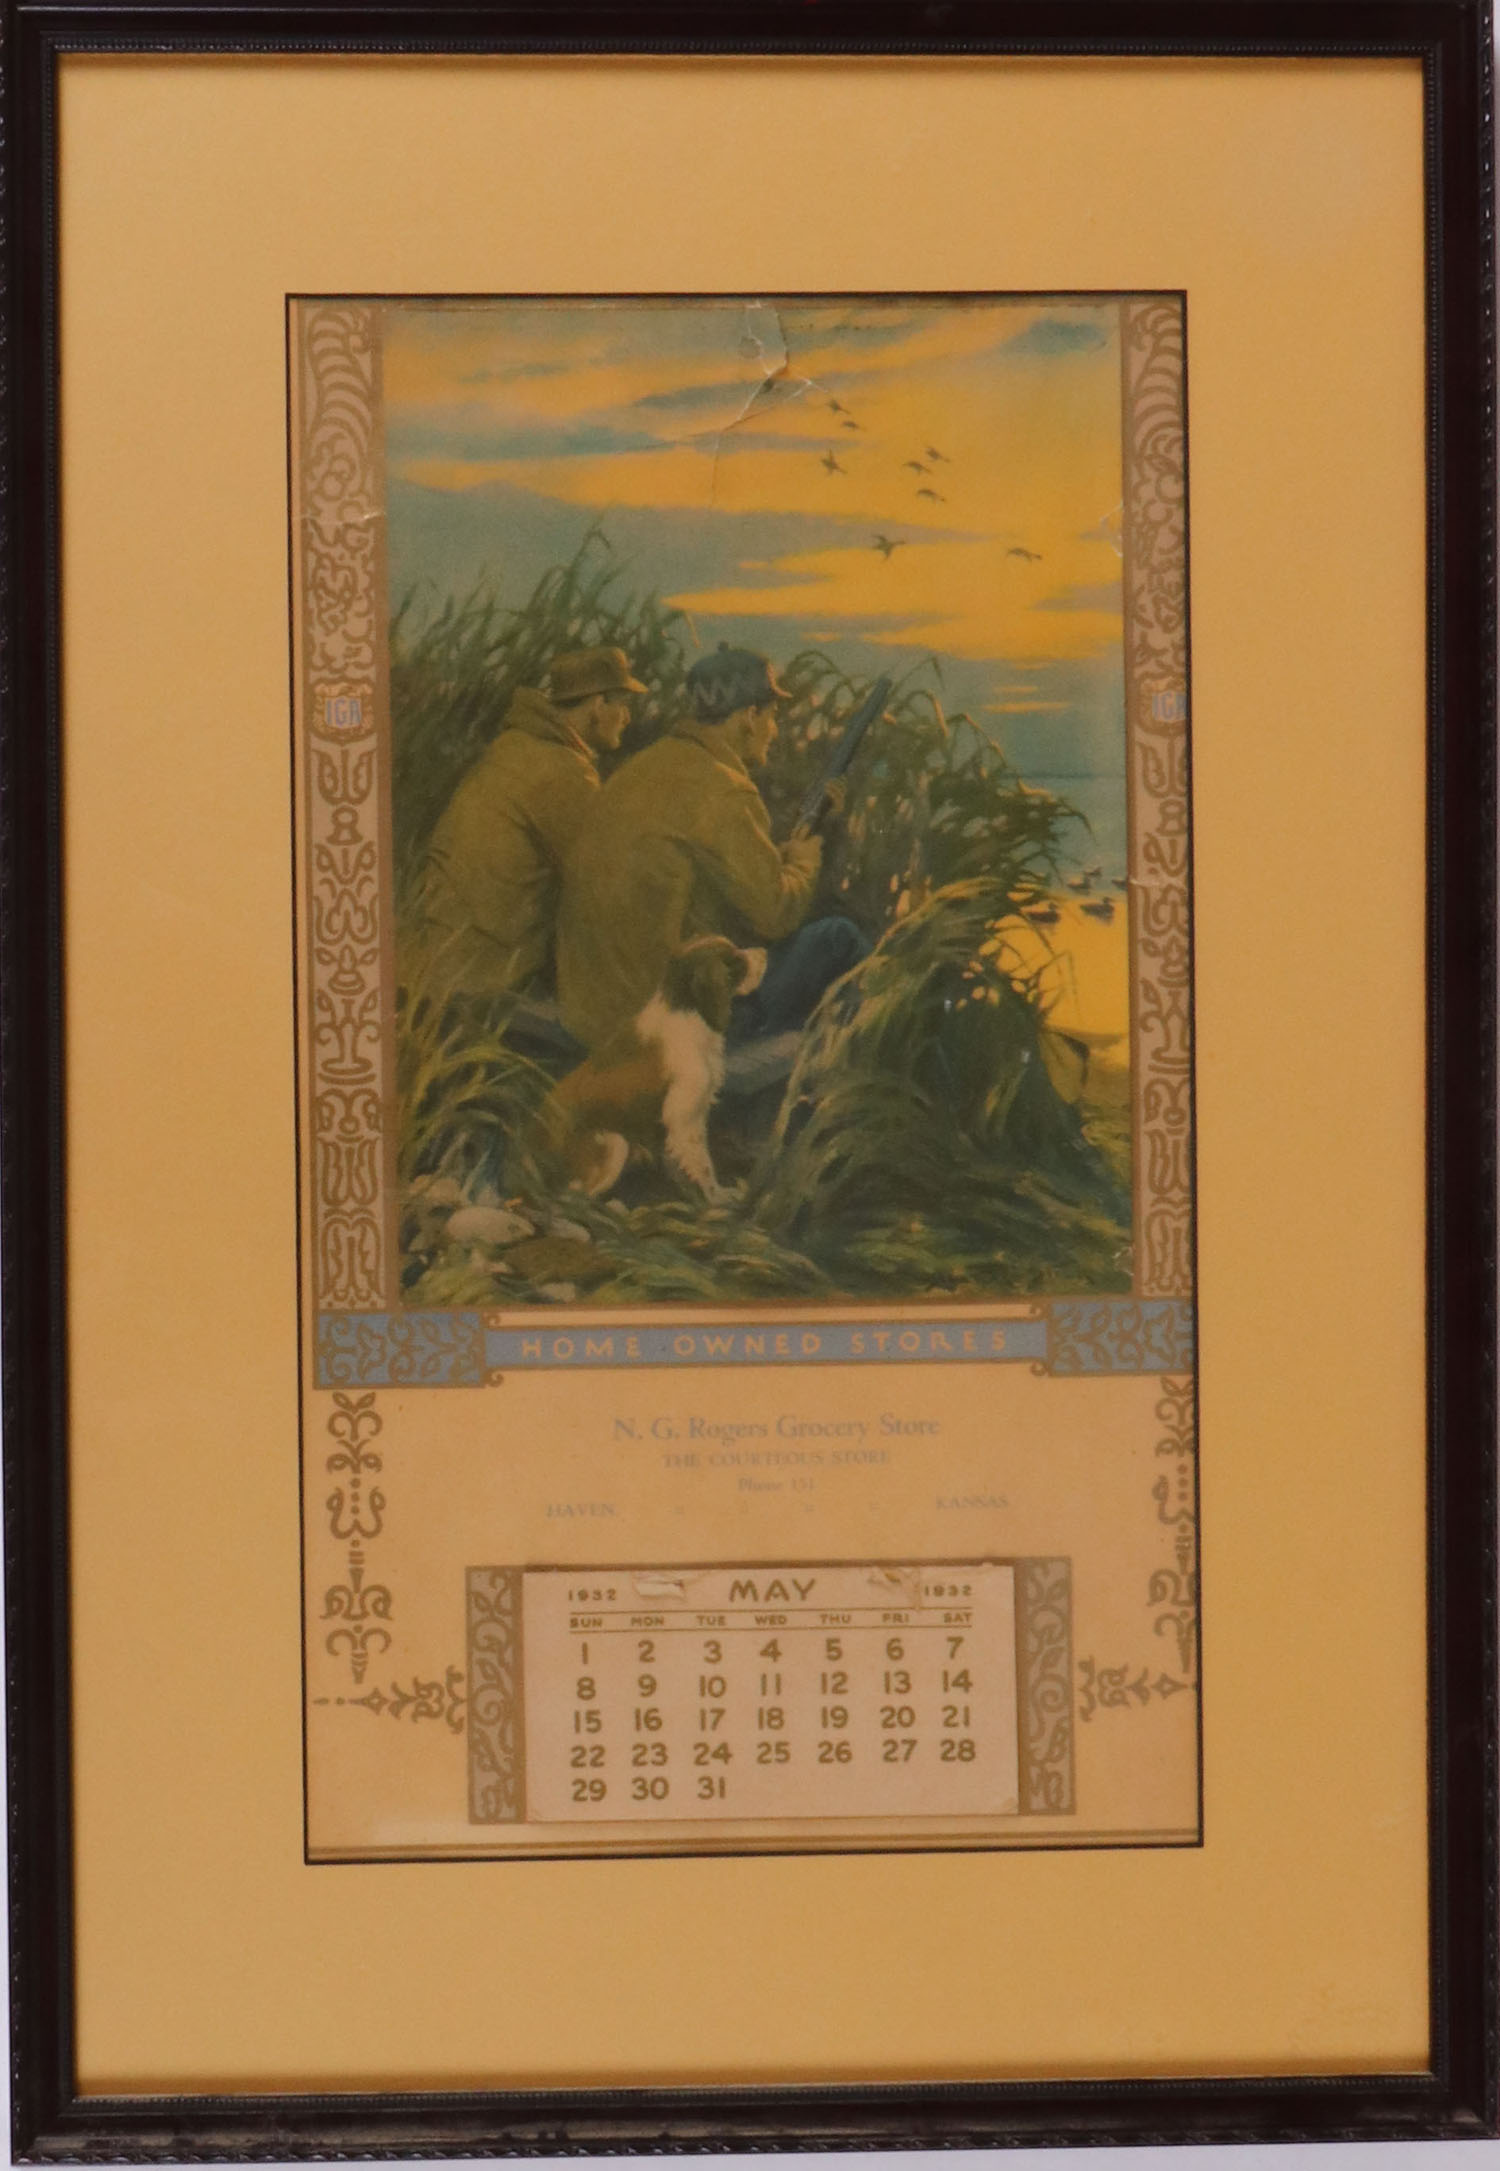 Item 8133 (Ended 20231202 164726) 1932 duck hunting calendar